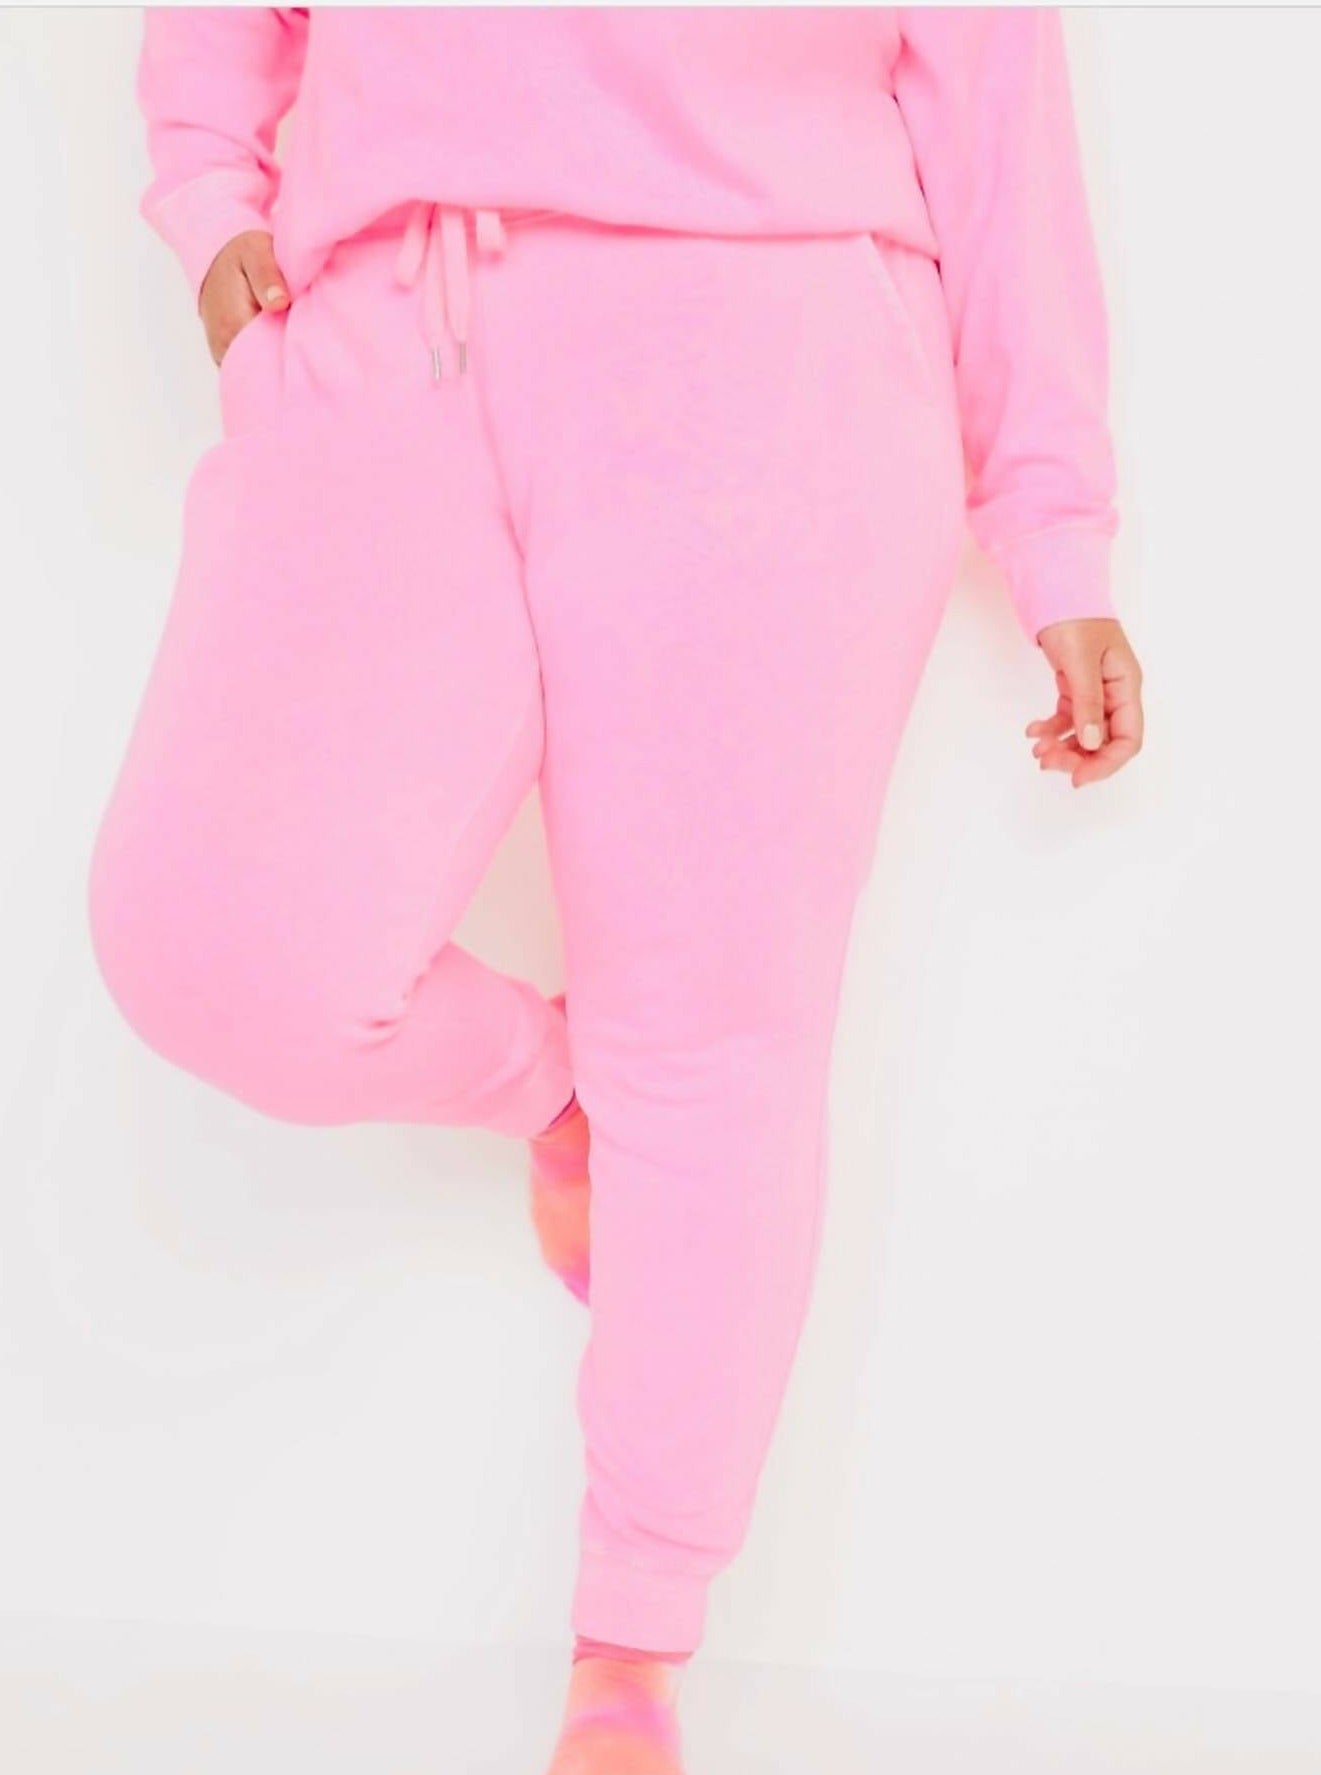 Purple Earth Special Dyed Sweatpants - Hot Pink - Shop Zetu Kenya